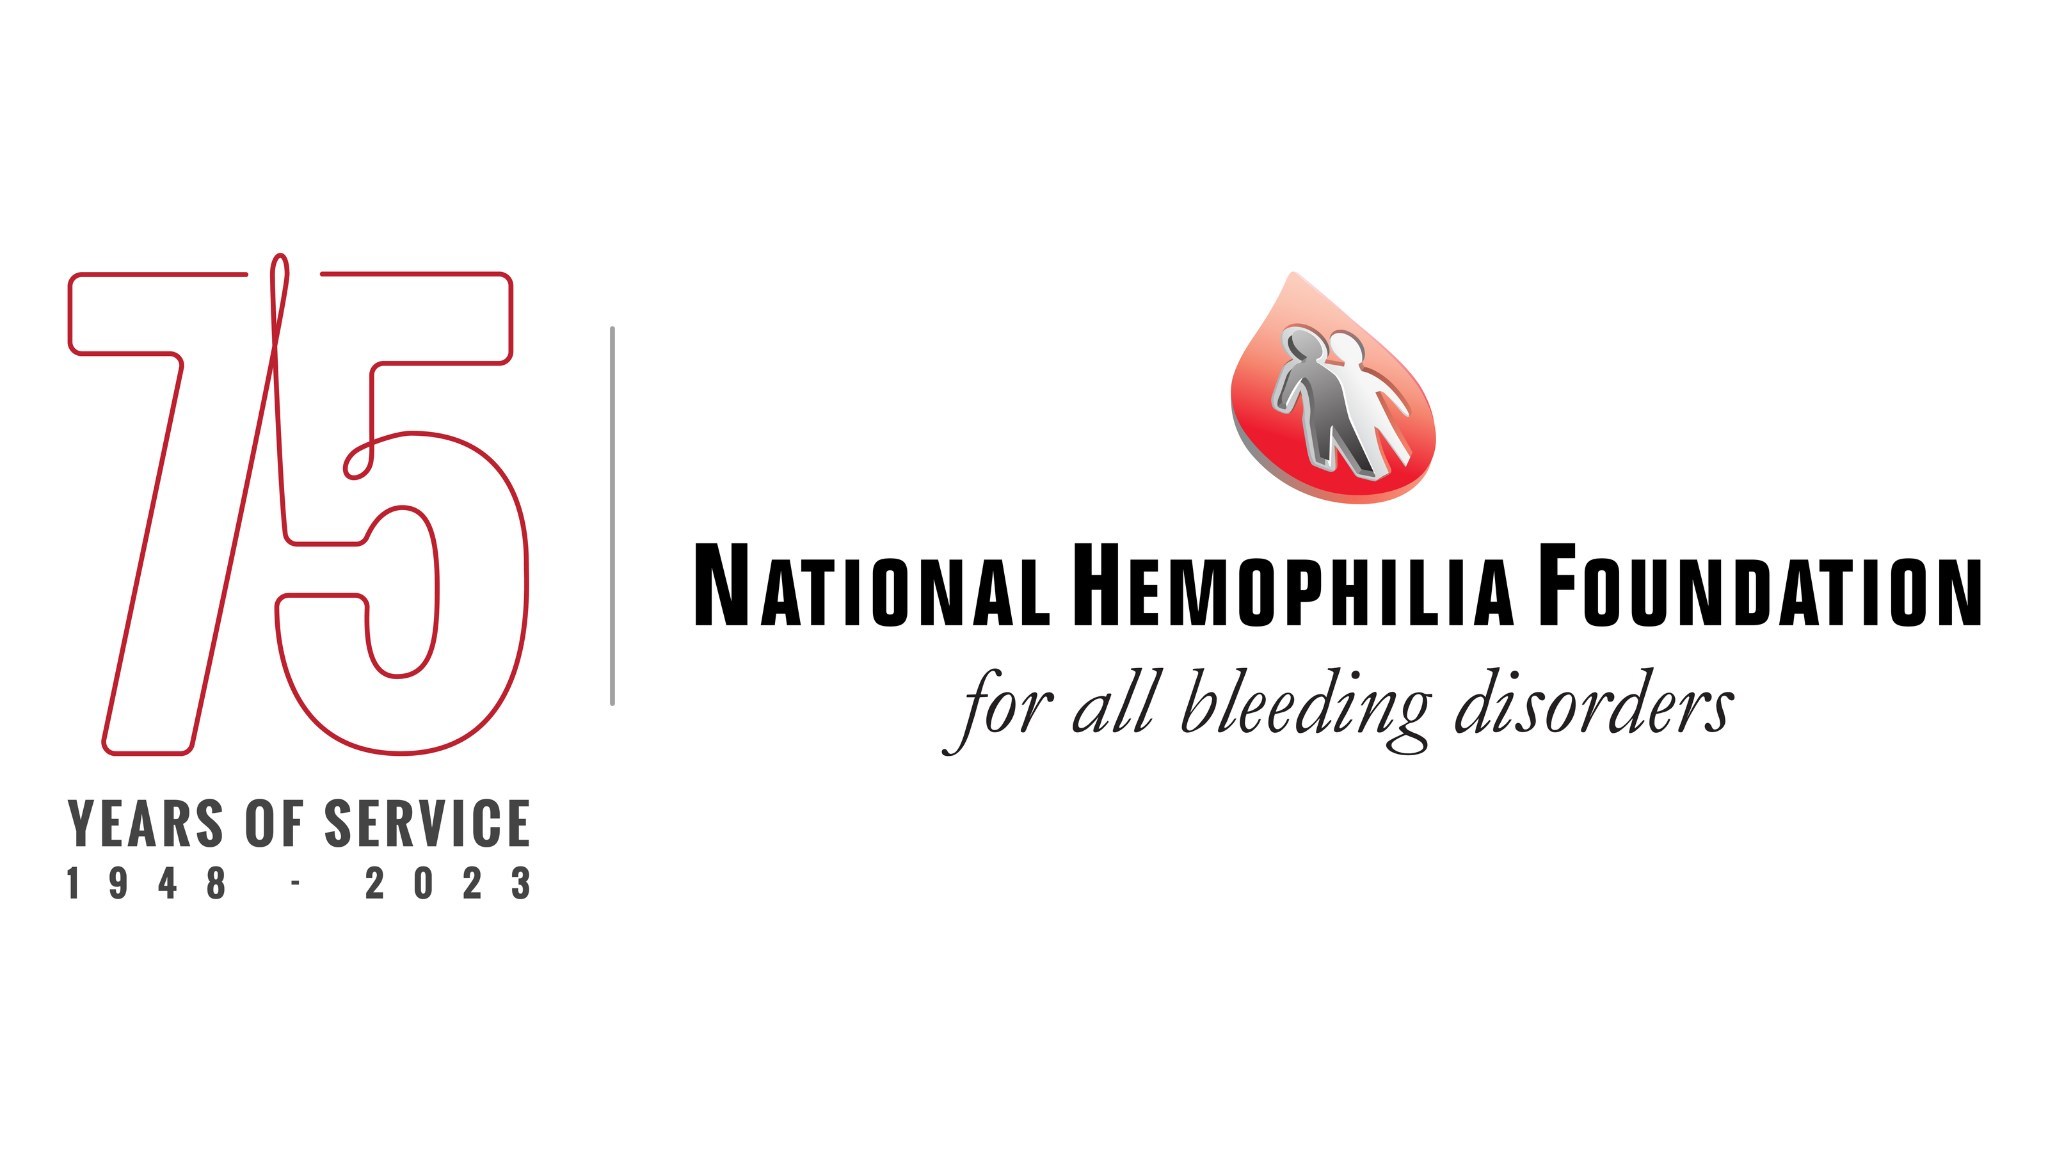 National Hemophilia Foundation Celebrates 75 Years in 2023